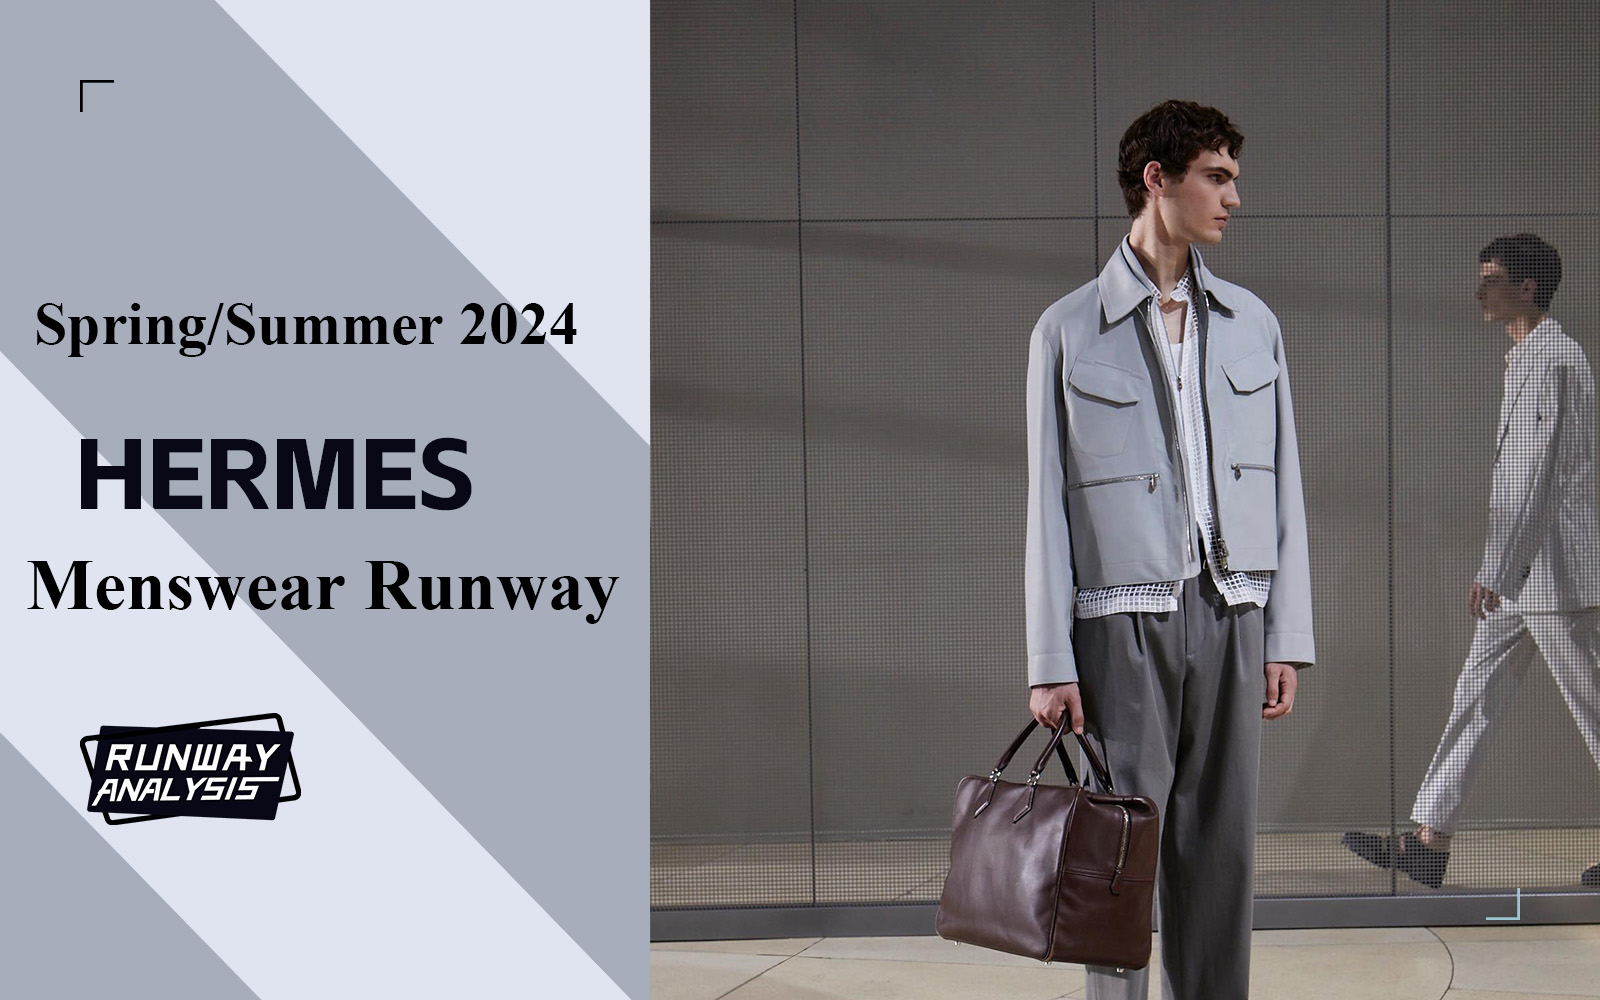 The Menswear Runway Analysis of Hermès